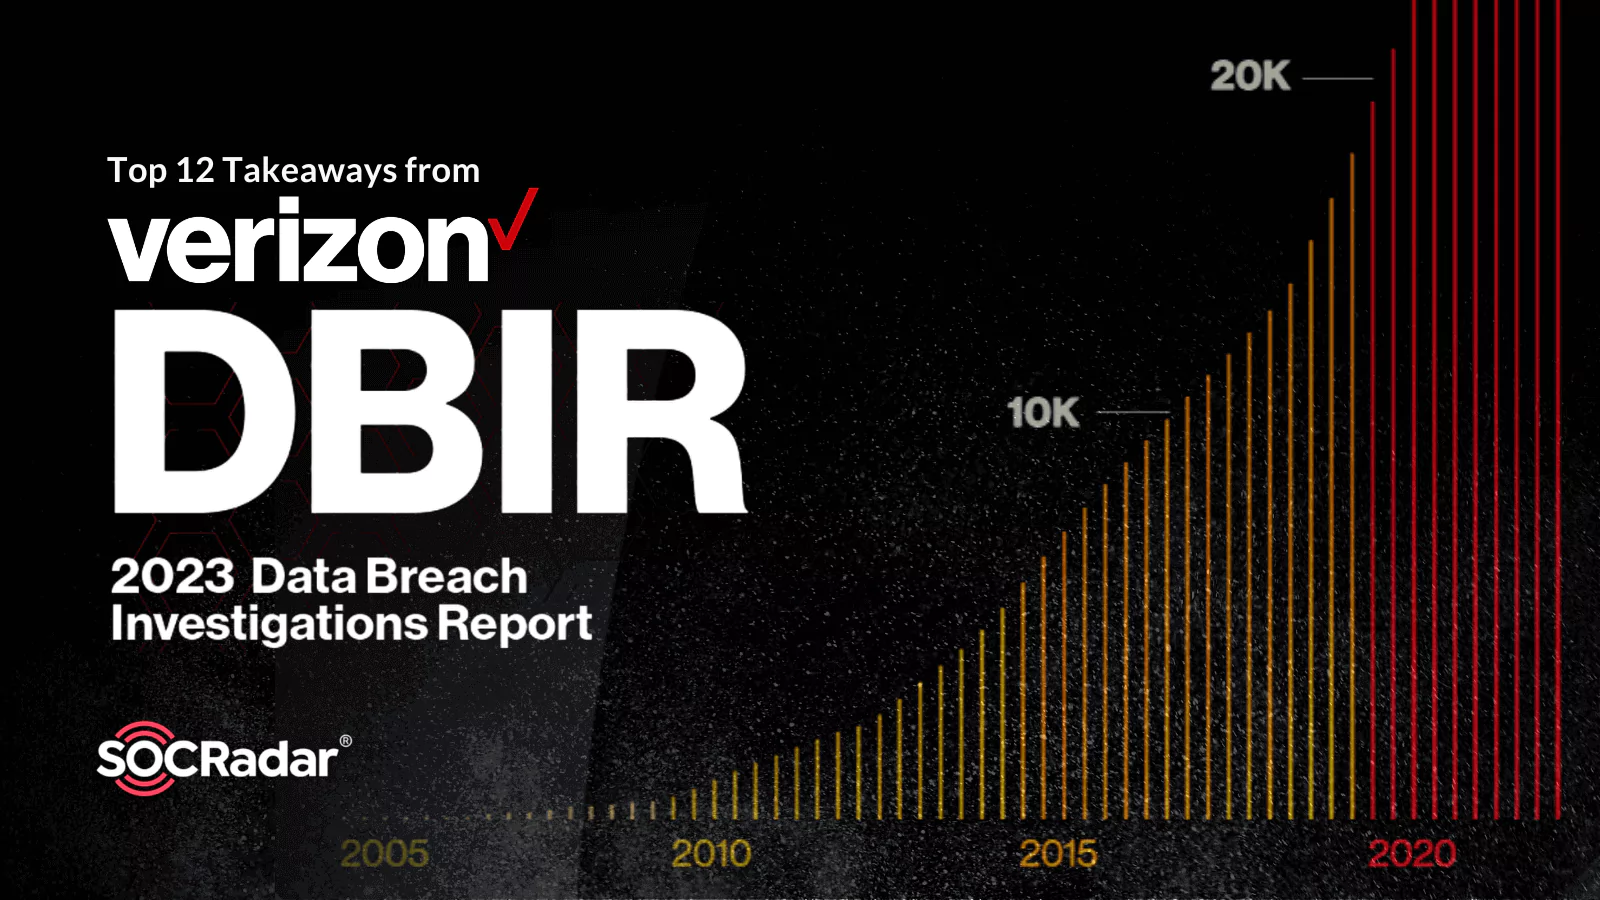 Top 12 Takeaways from Verizon 2023 Data Breach Investigations Report